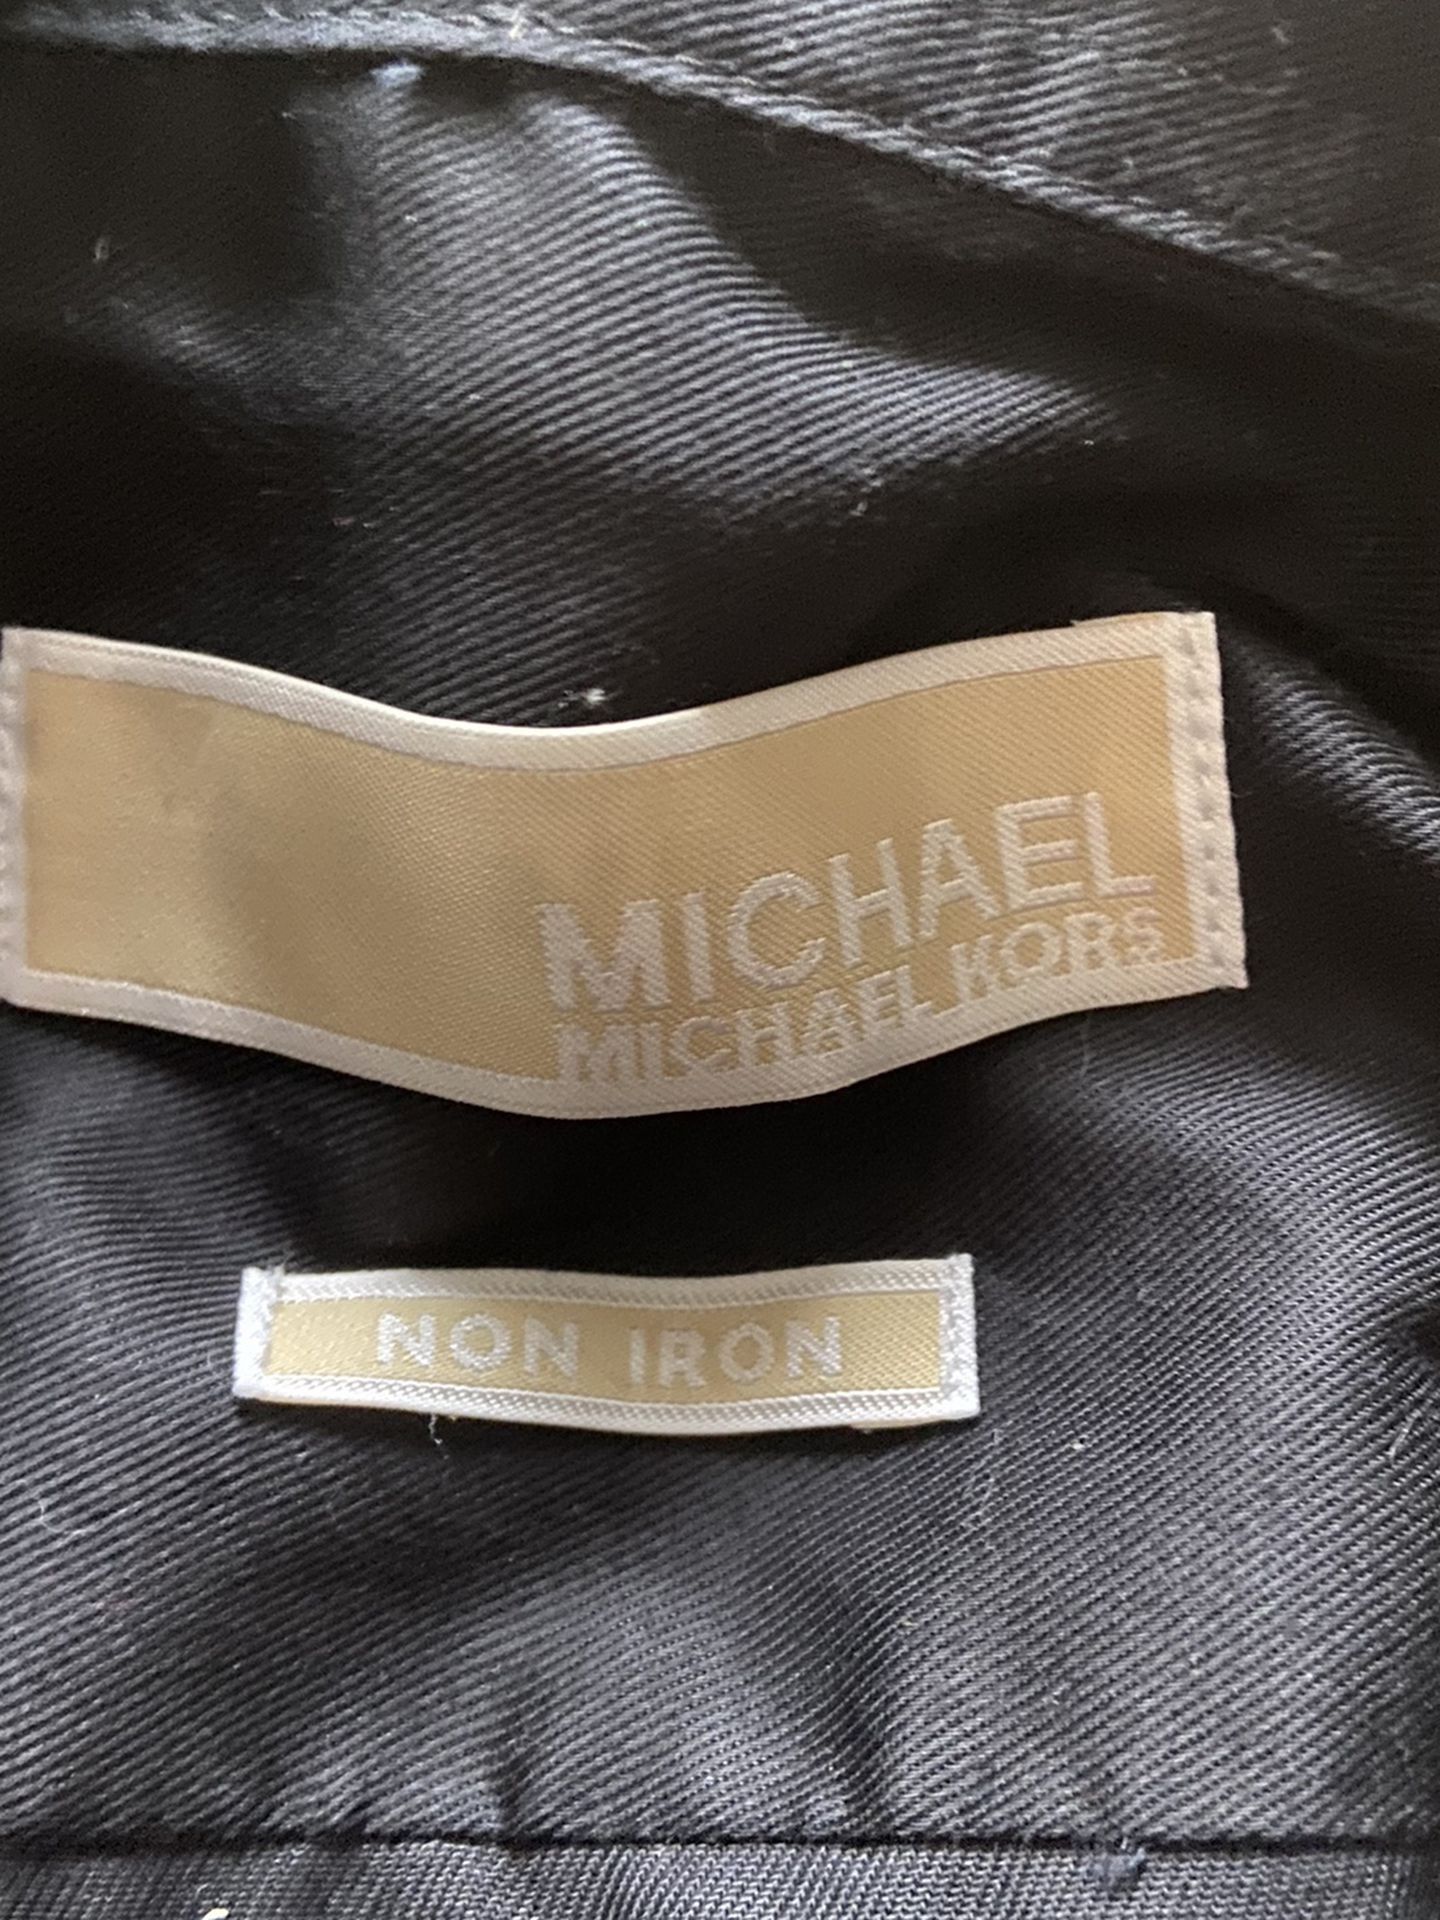 Michael Kors Long Sleeve Dress Shirt